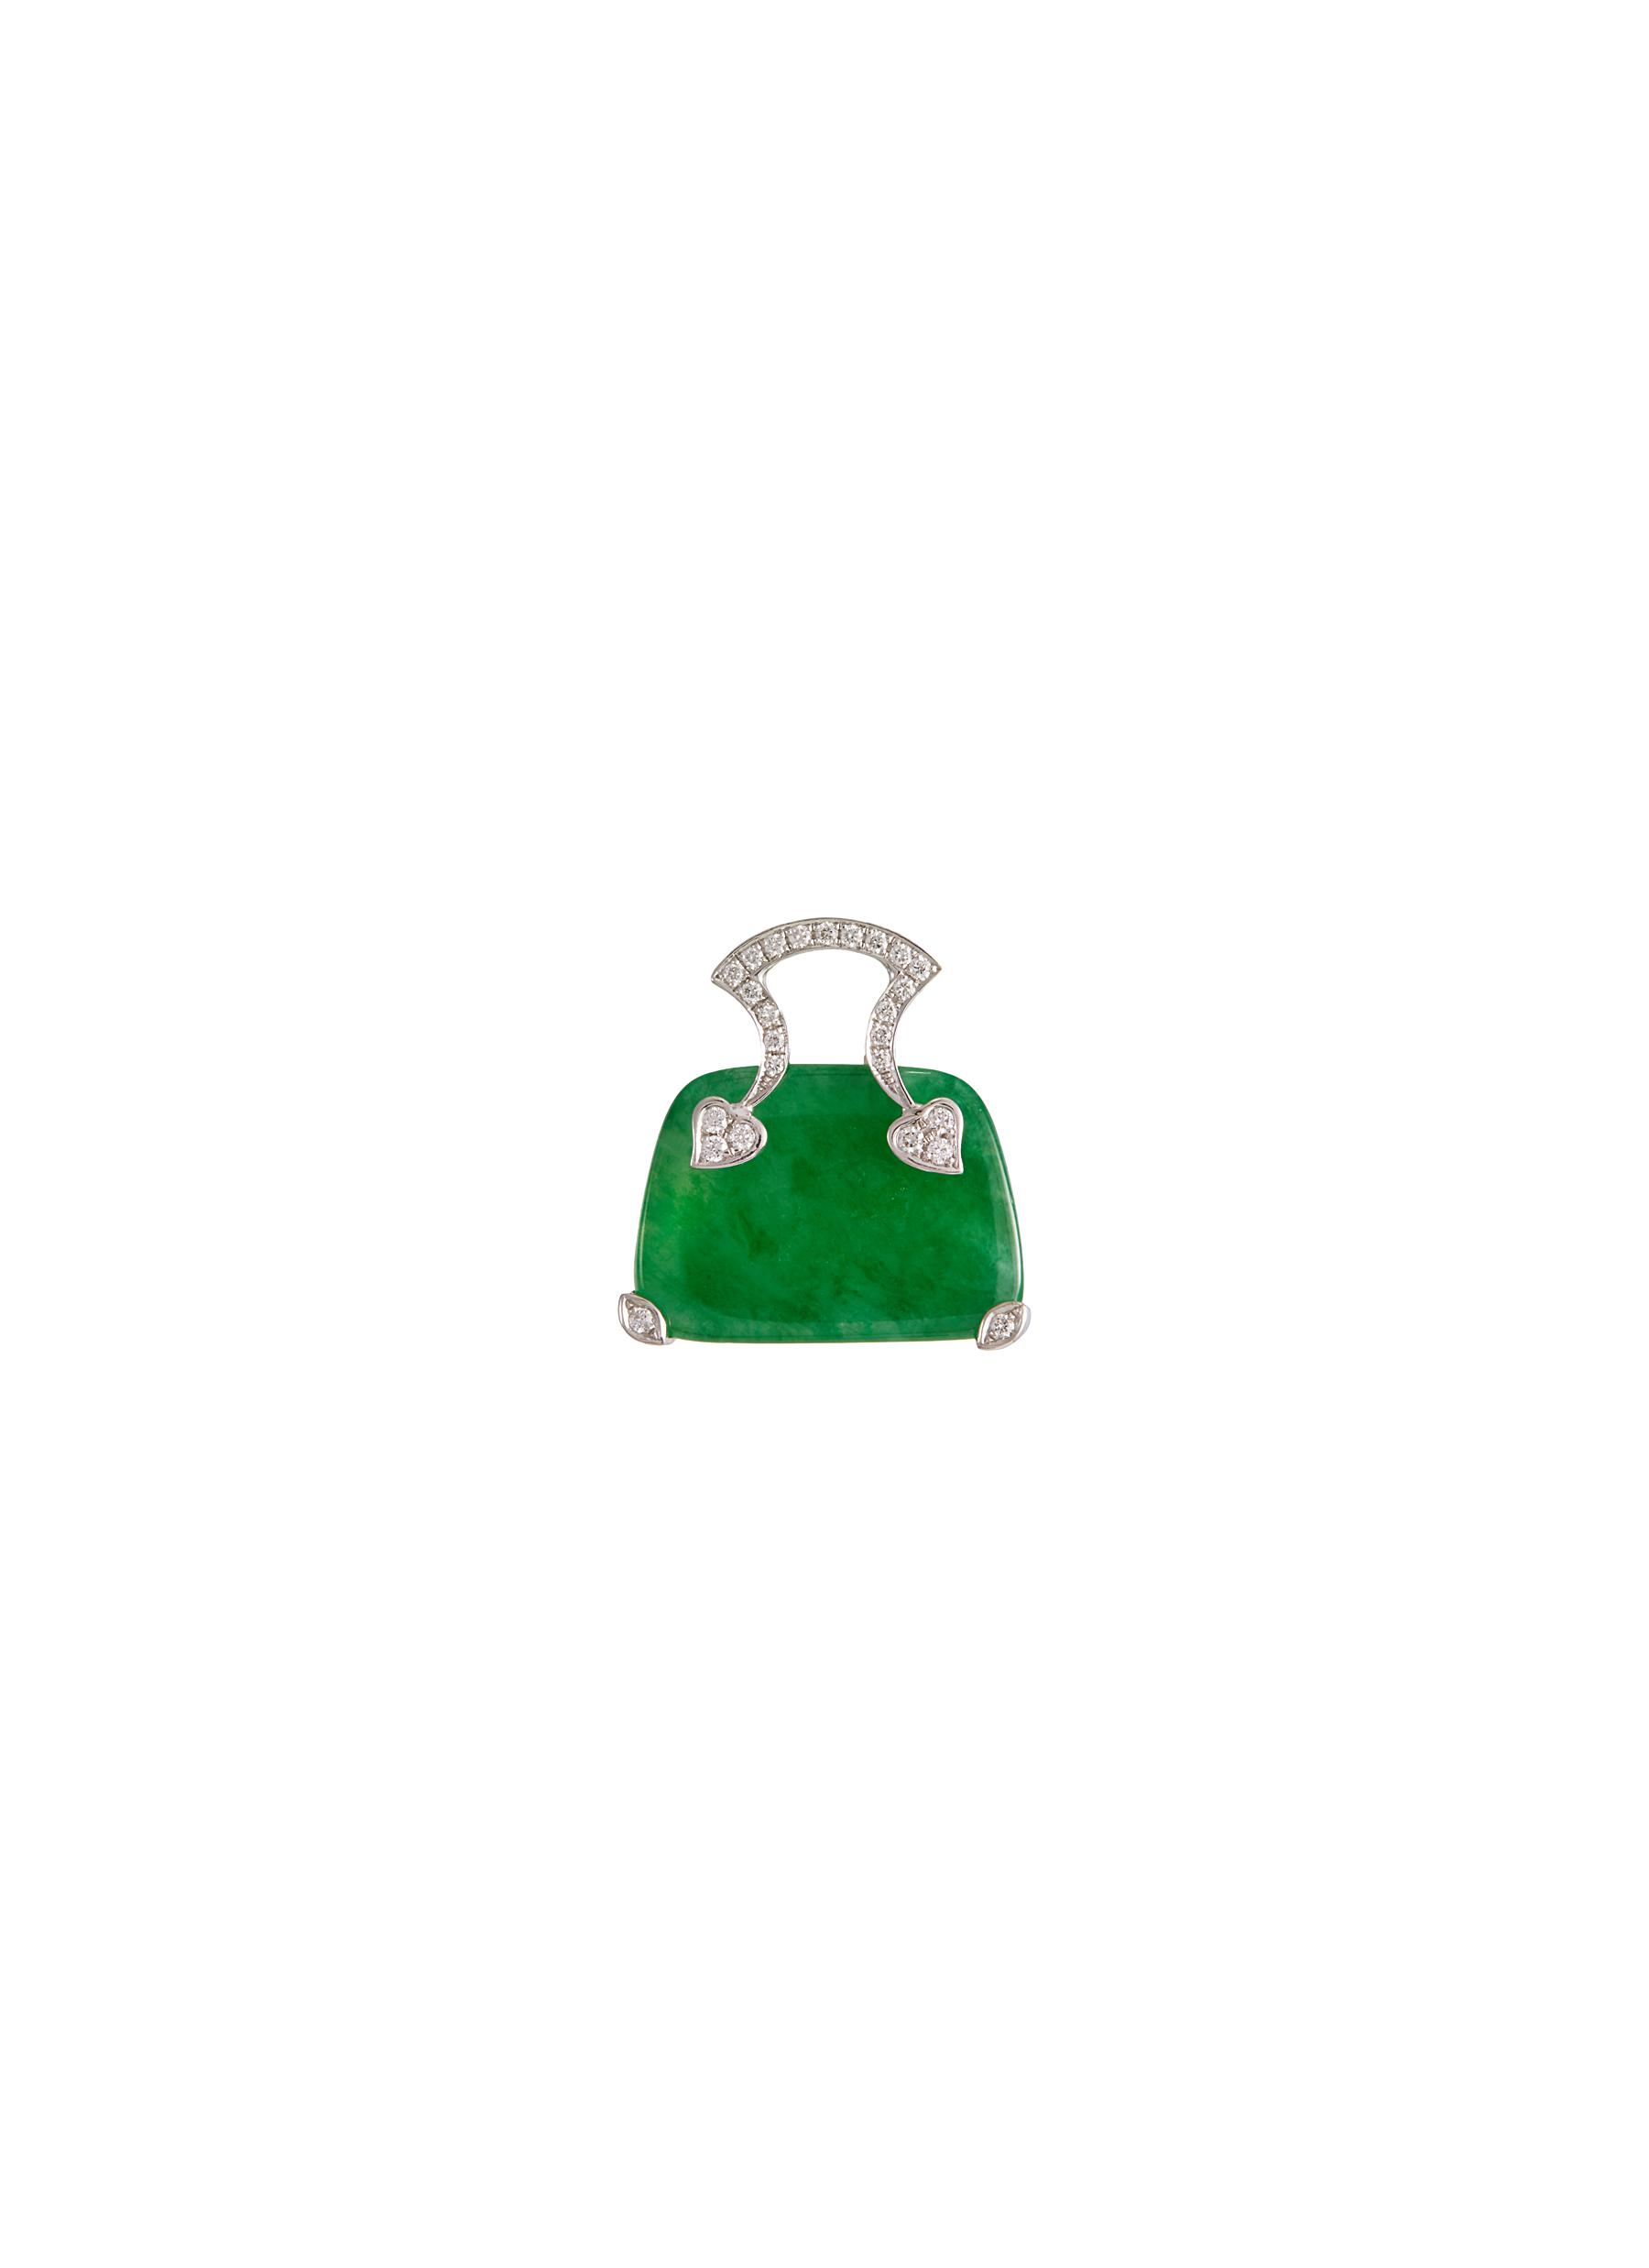 Diamond jade 18k white gold pendant